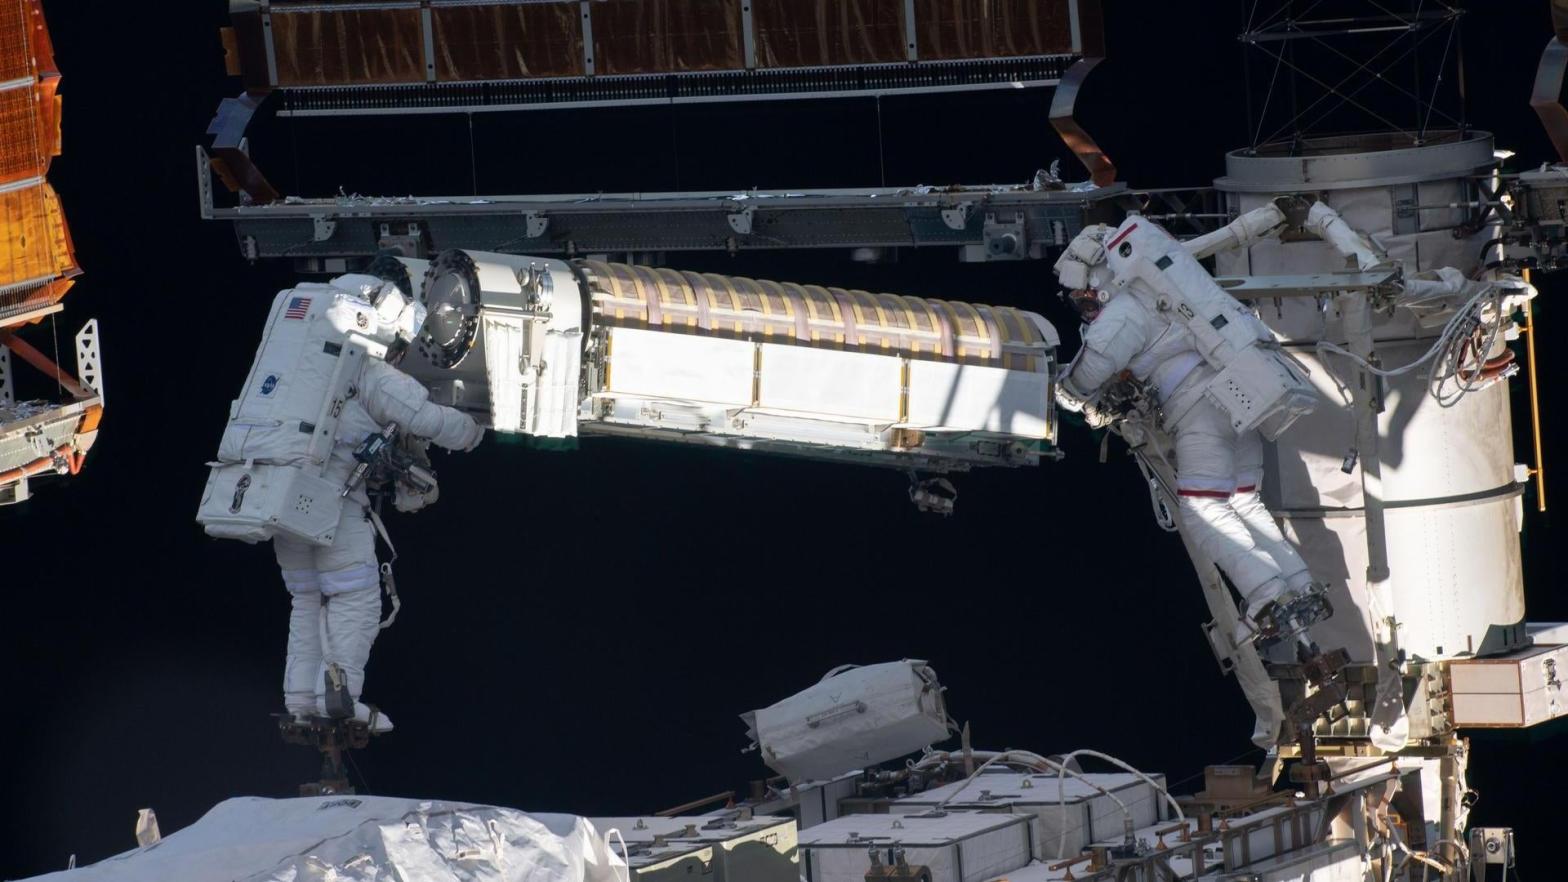 NASA astronaut Shane Kimbrough (left) and ESA astronaut Thomas Pesquet (right) during a spacewalk on June 16, 2021 to install new solar arrays. (Image: NASA)